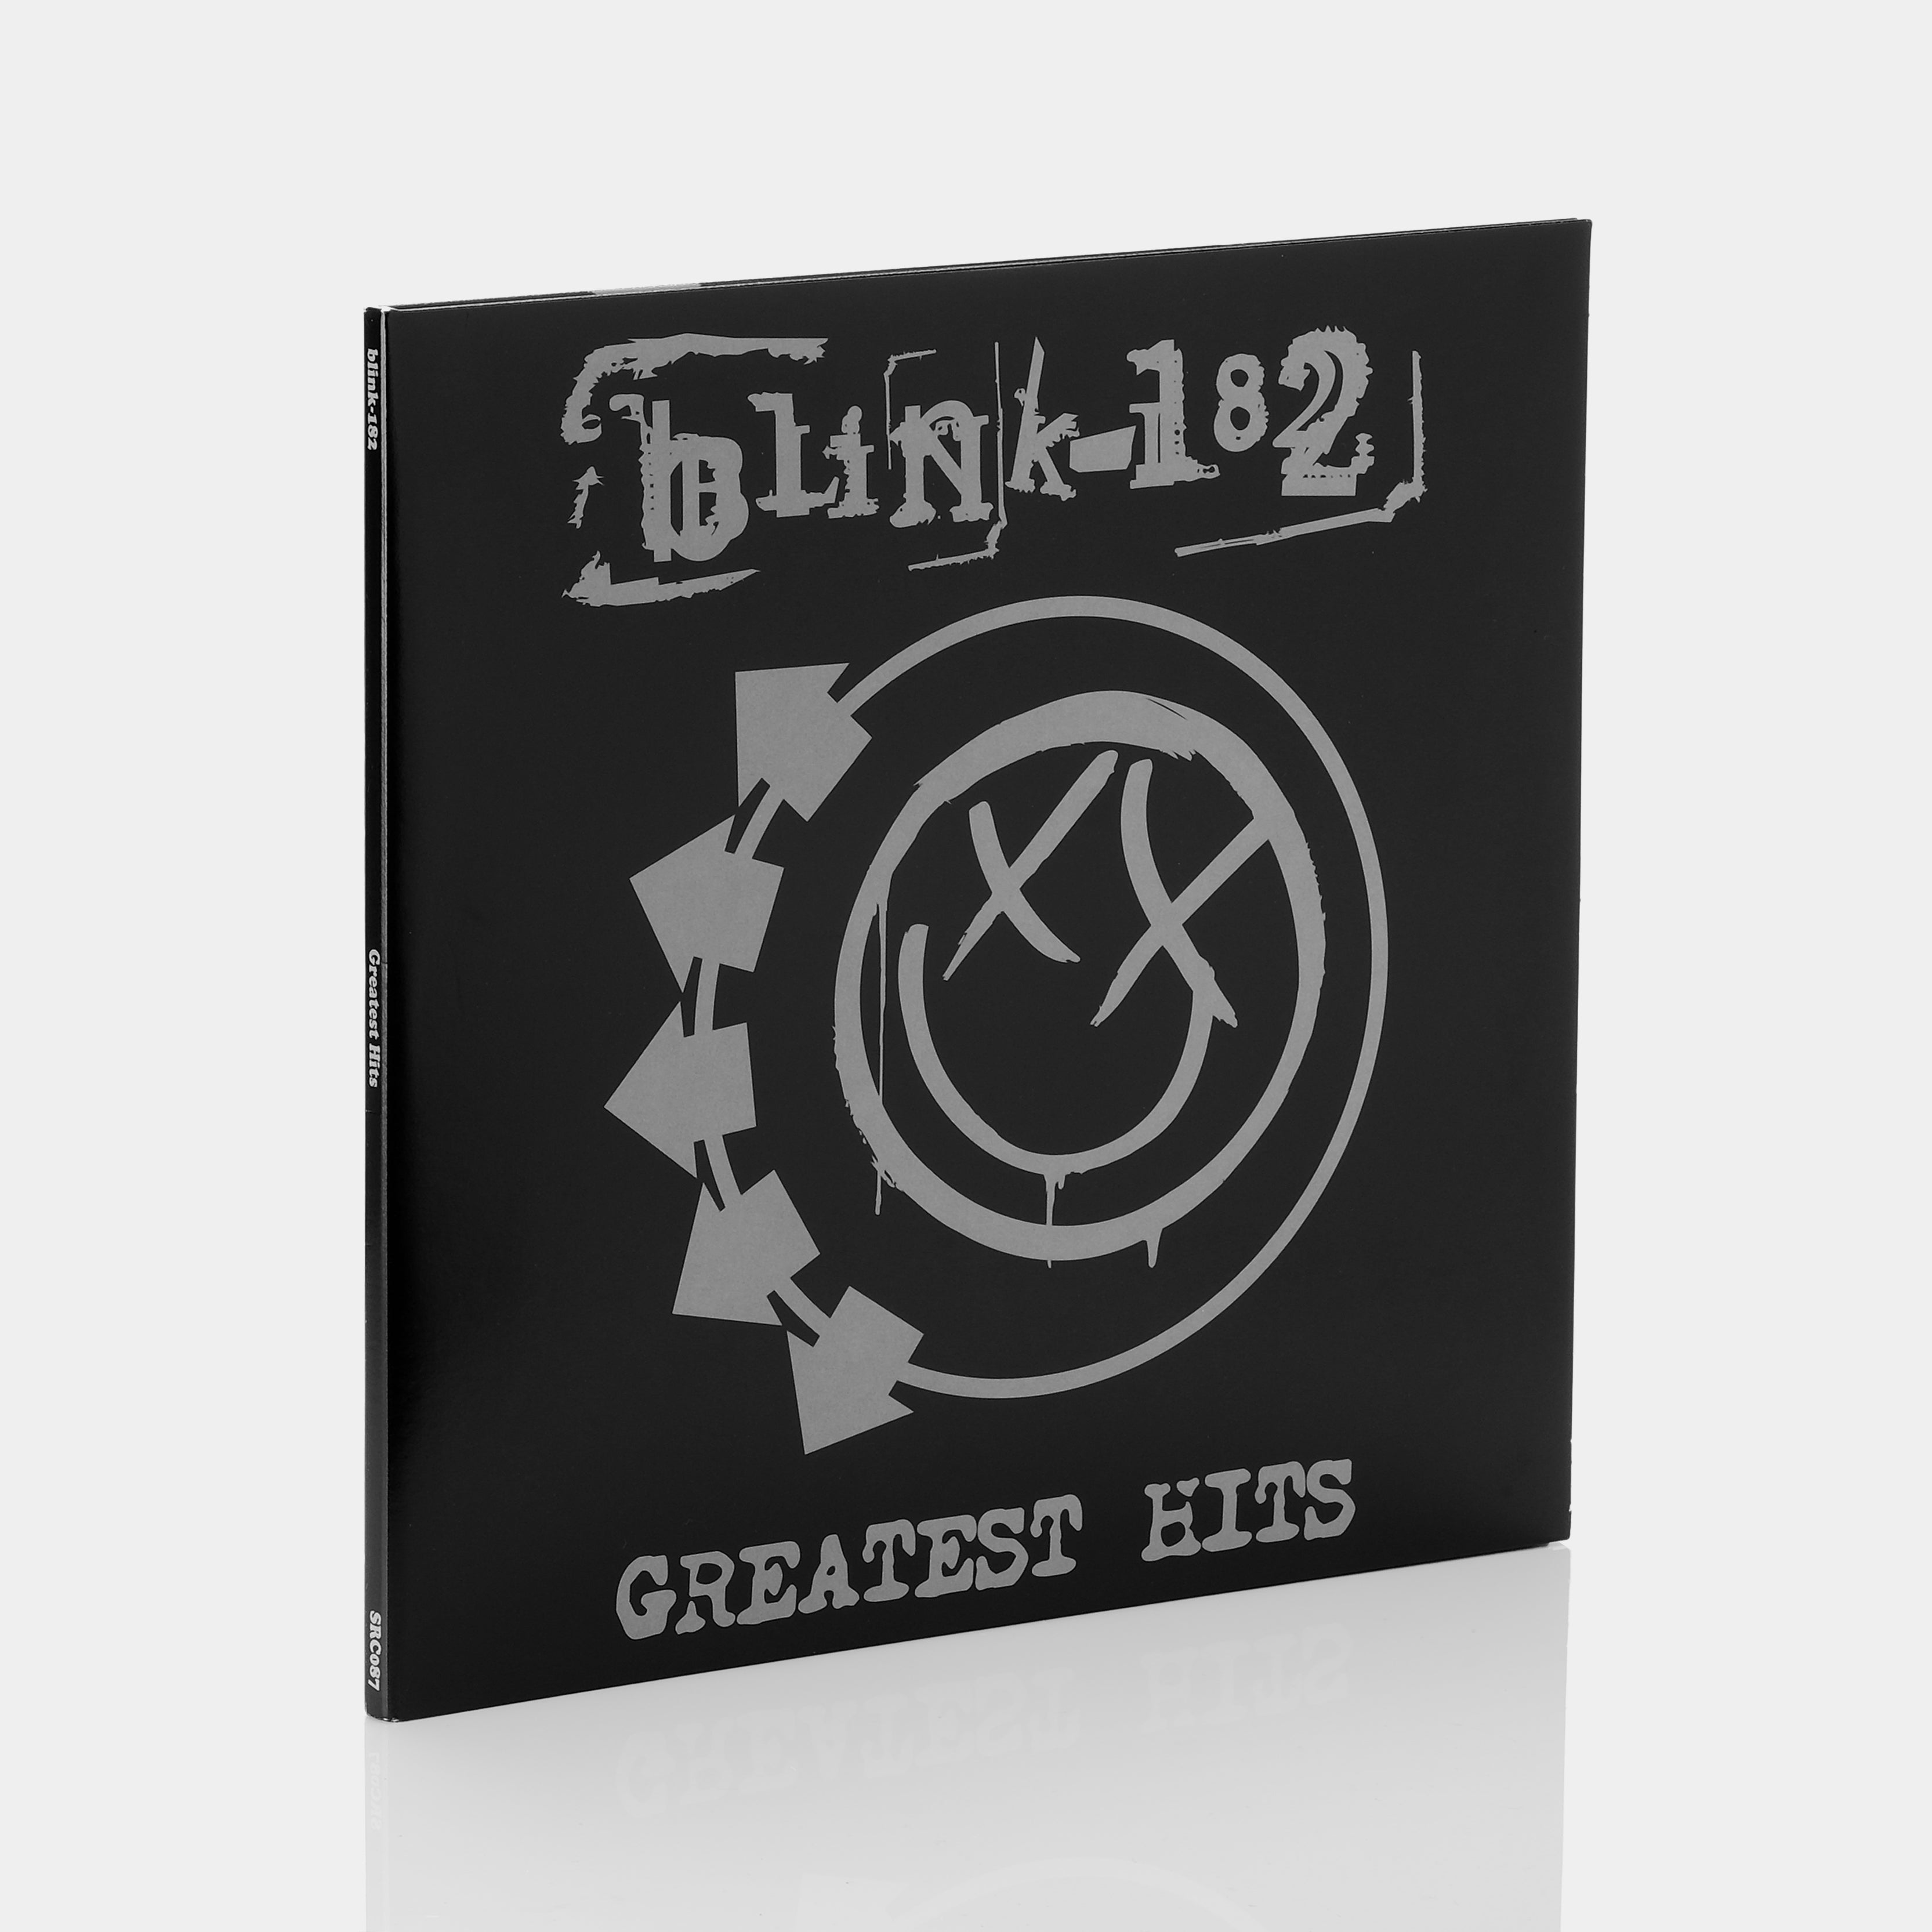 Blink-182 - Greatest Hits 2xLP Clear Vinyl Record